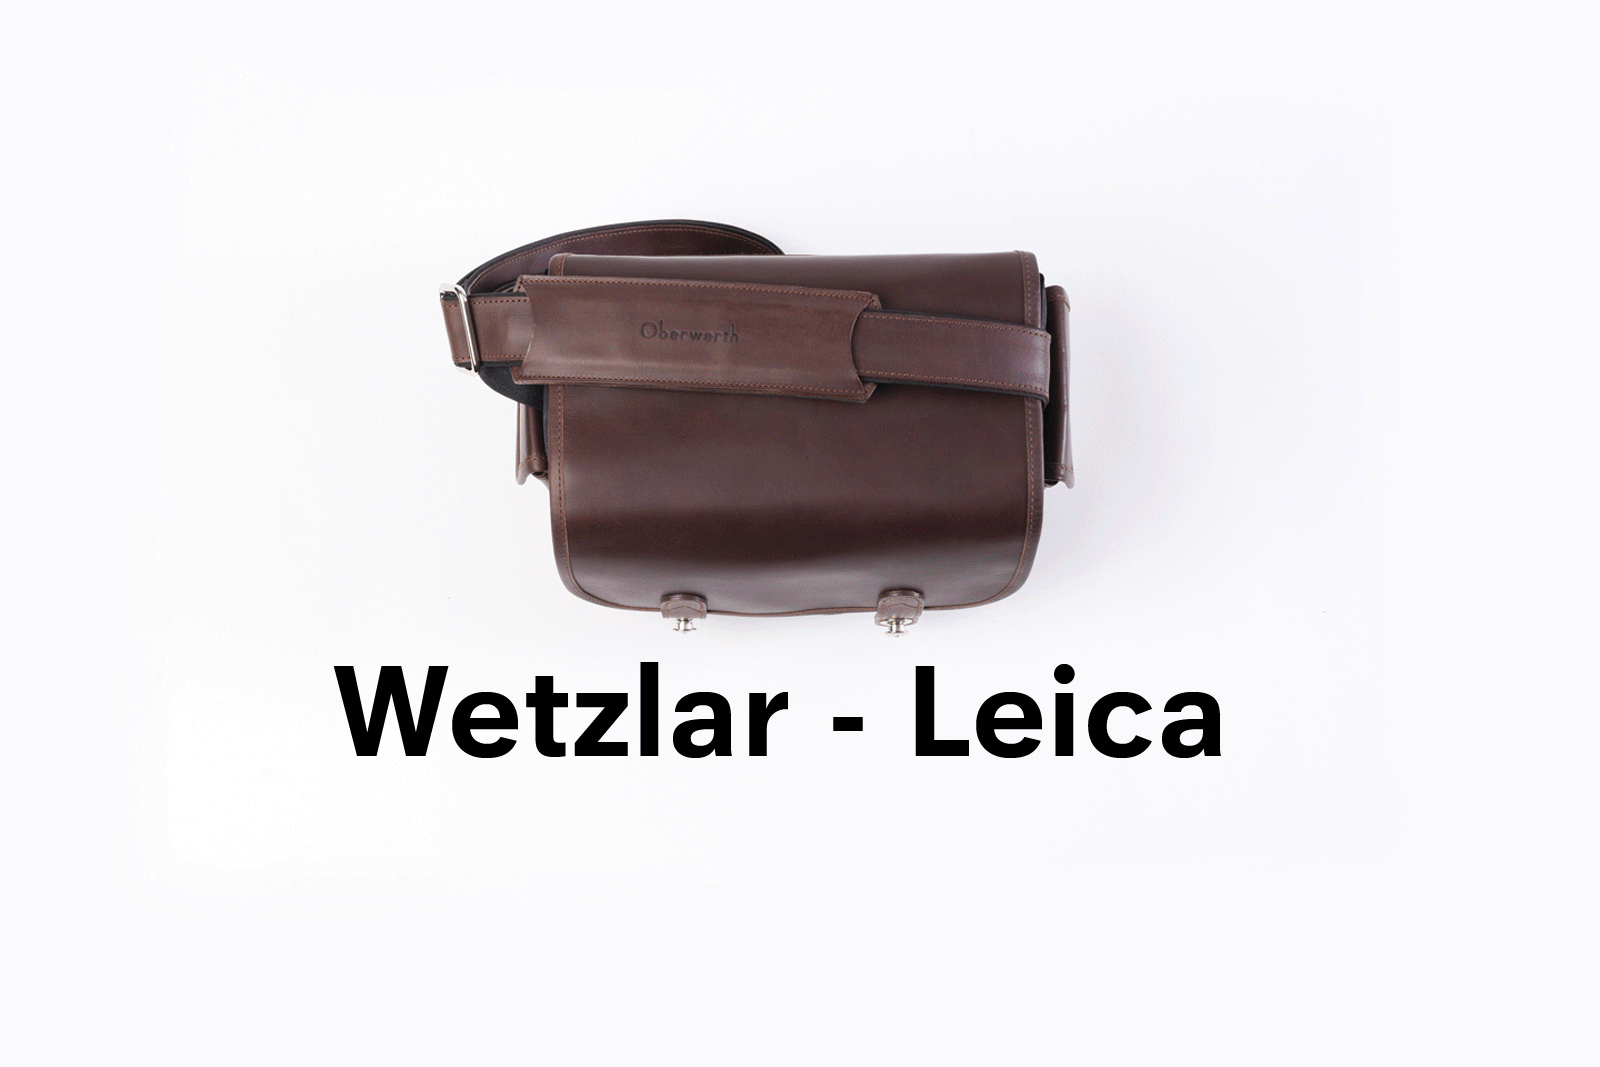 Camera bag WETZLAR 2